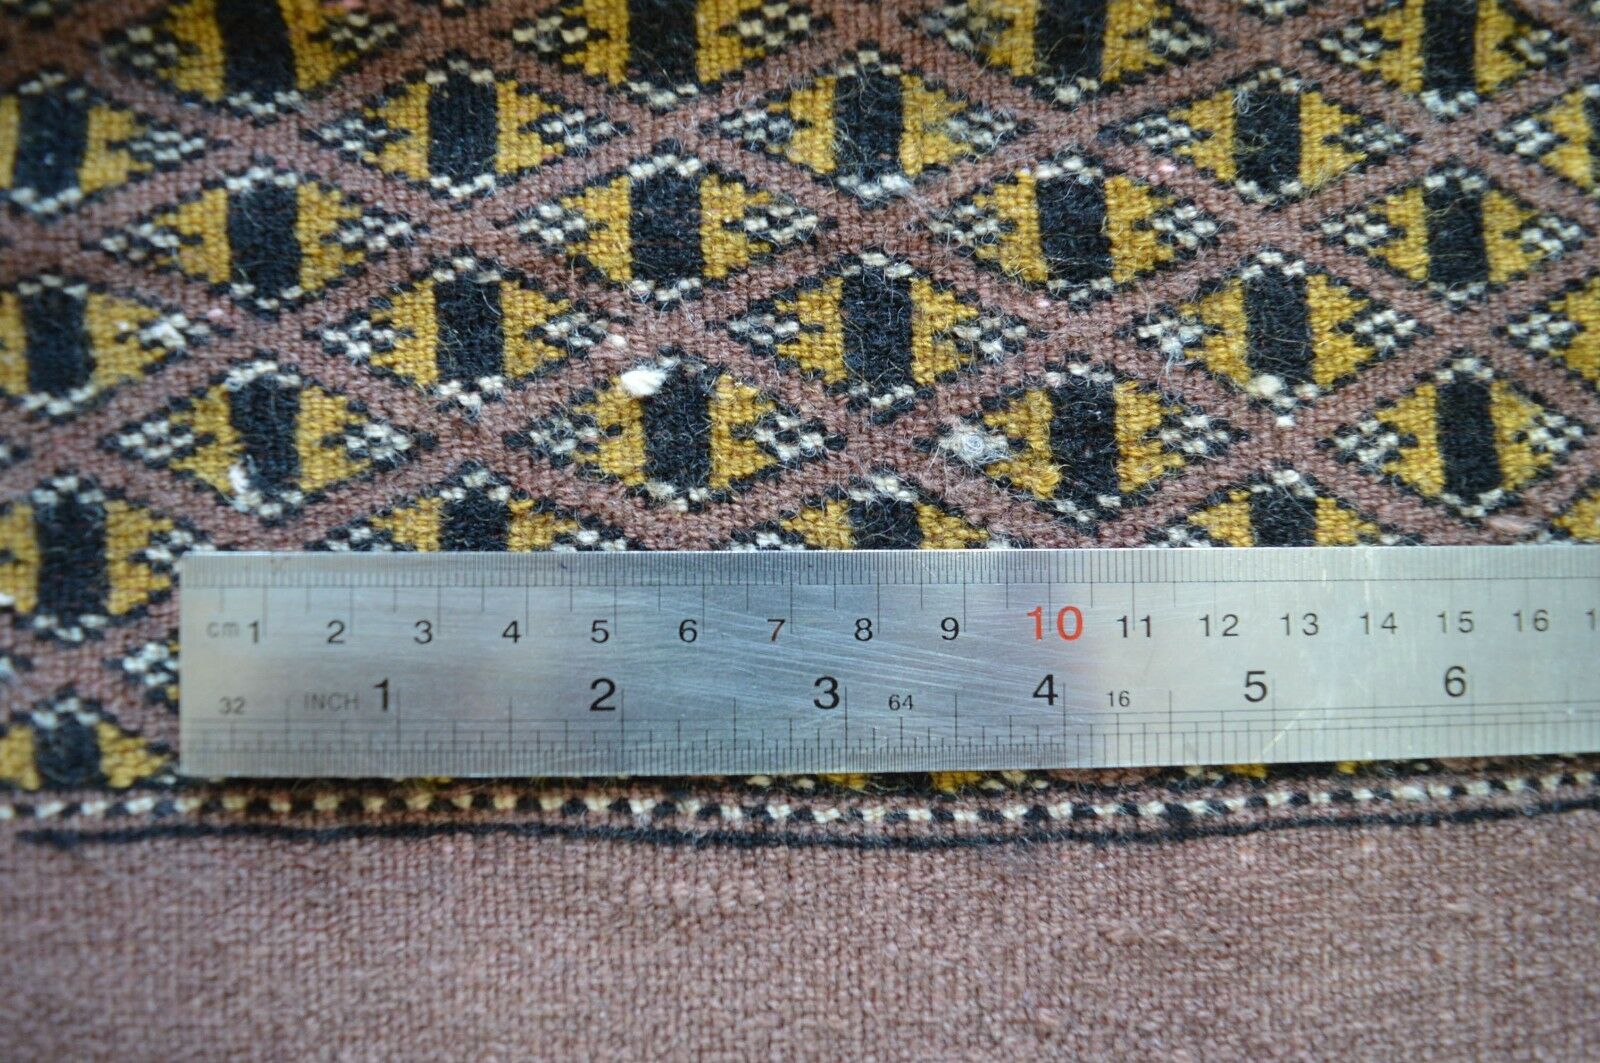 Wie neu! Buchara 336x236 Bukhara Tekke Rug Carpet Perserteppich Orientteppich 